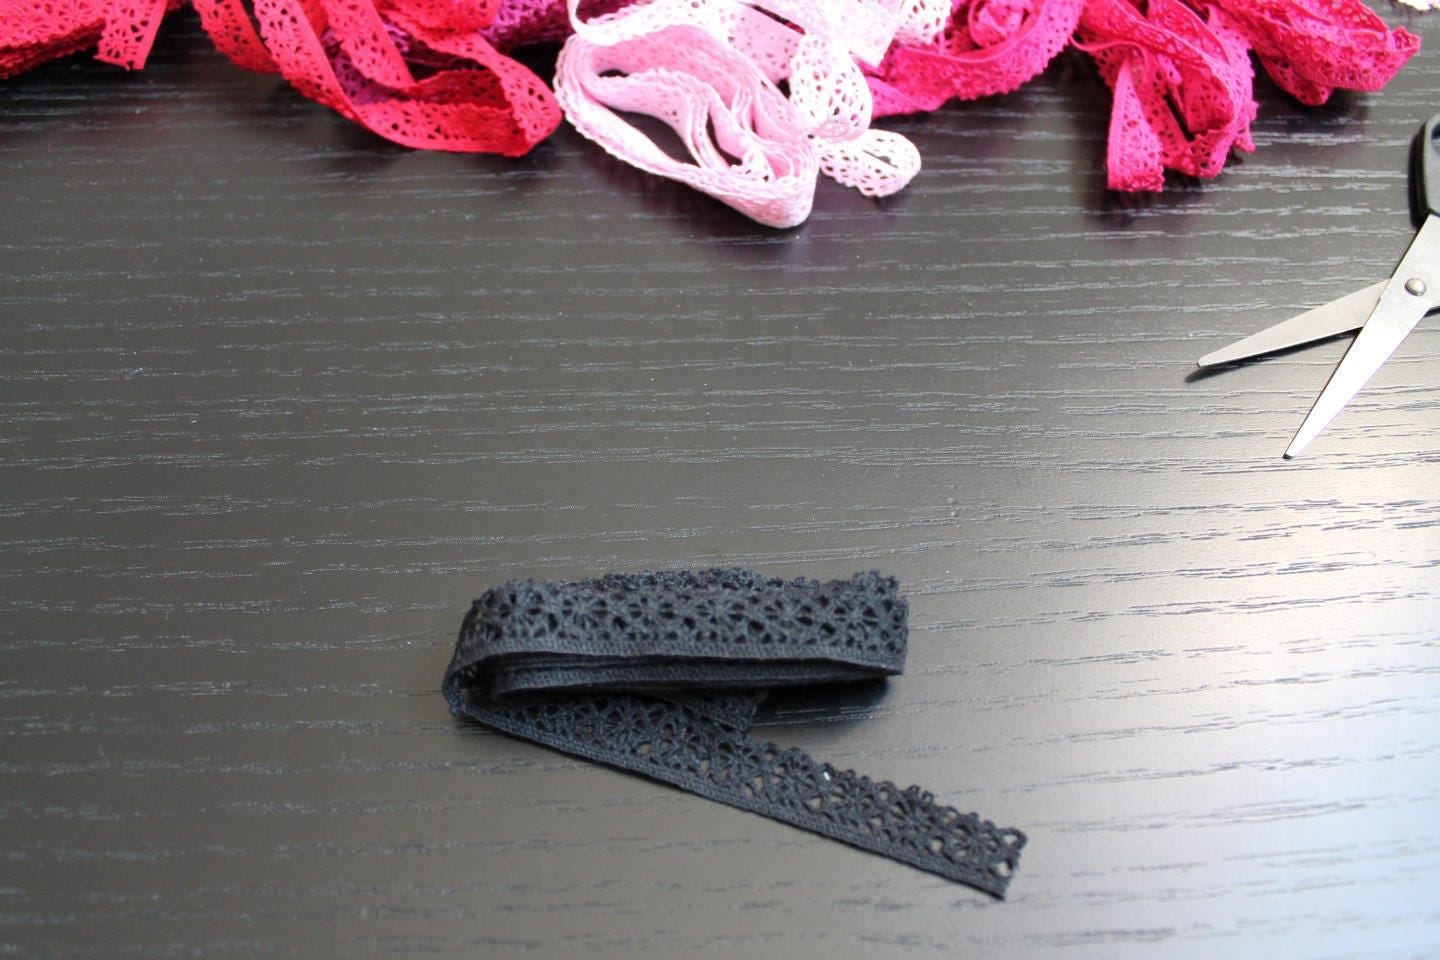 Narrow Black Satin Ribbon 6 Mm 1/4 Double Faced Pure Black Satin Ribbon Thin  Midnight Black Gift Wrapping Ribbon 